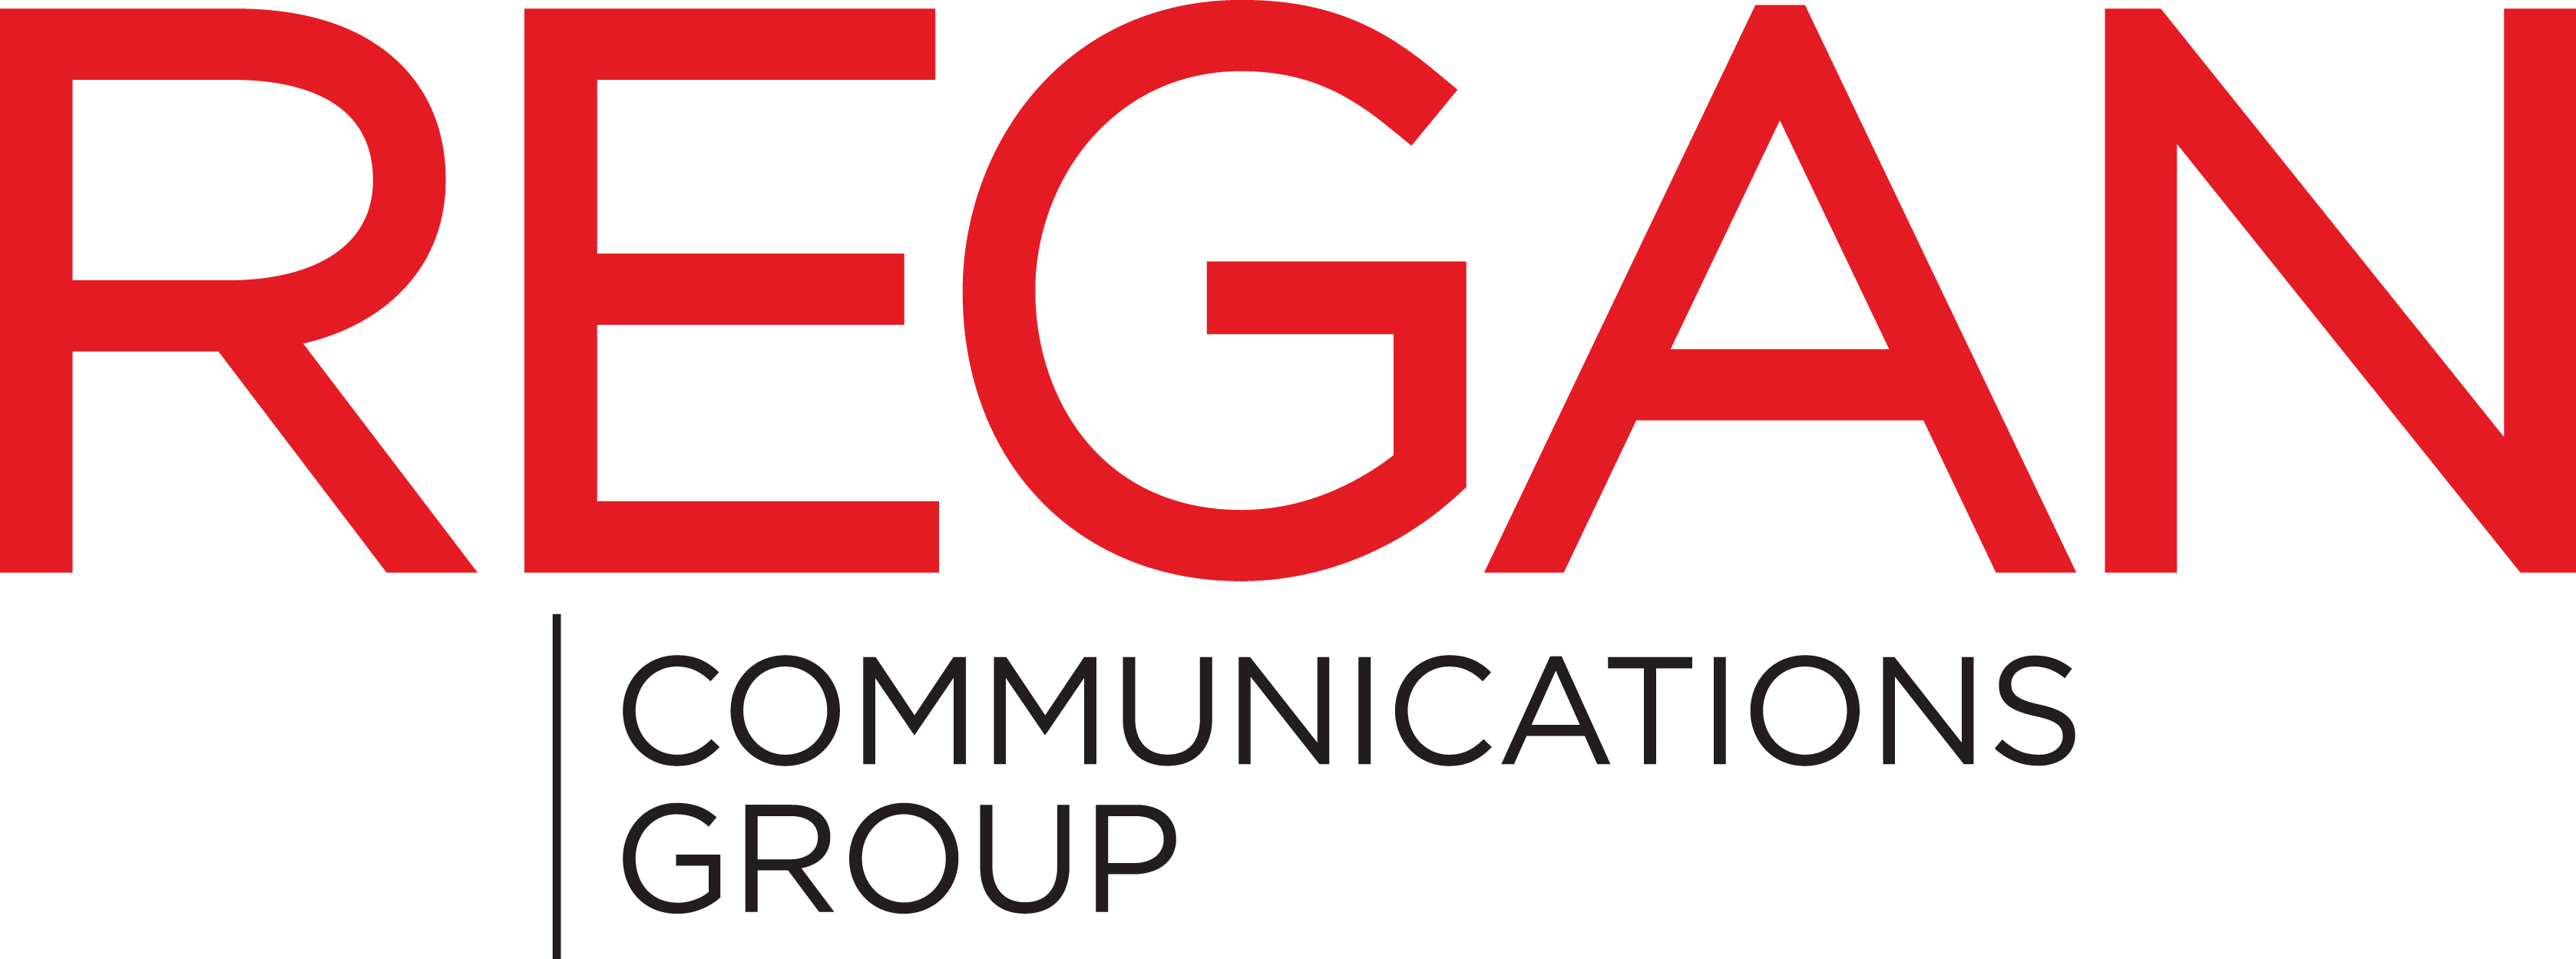  Leading Public Relations Firm Logo: Regan Communications Group